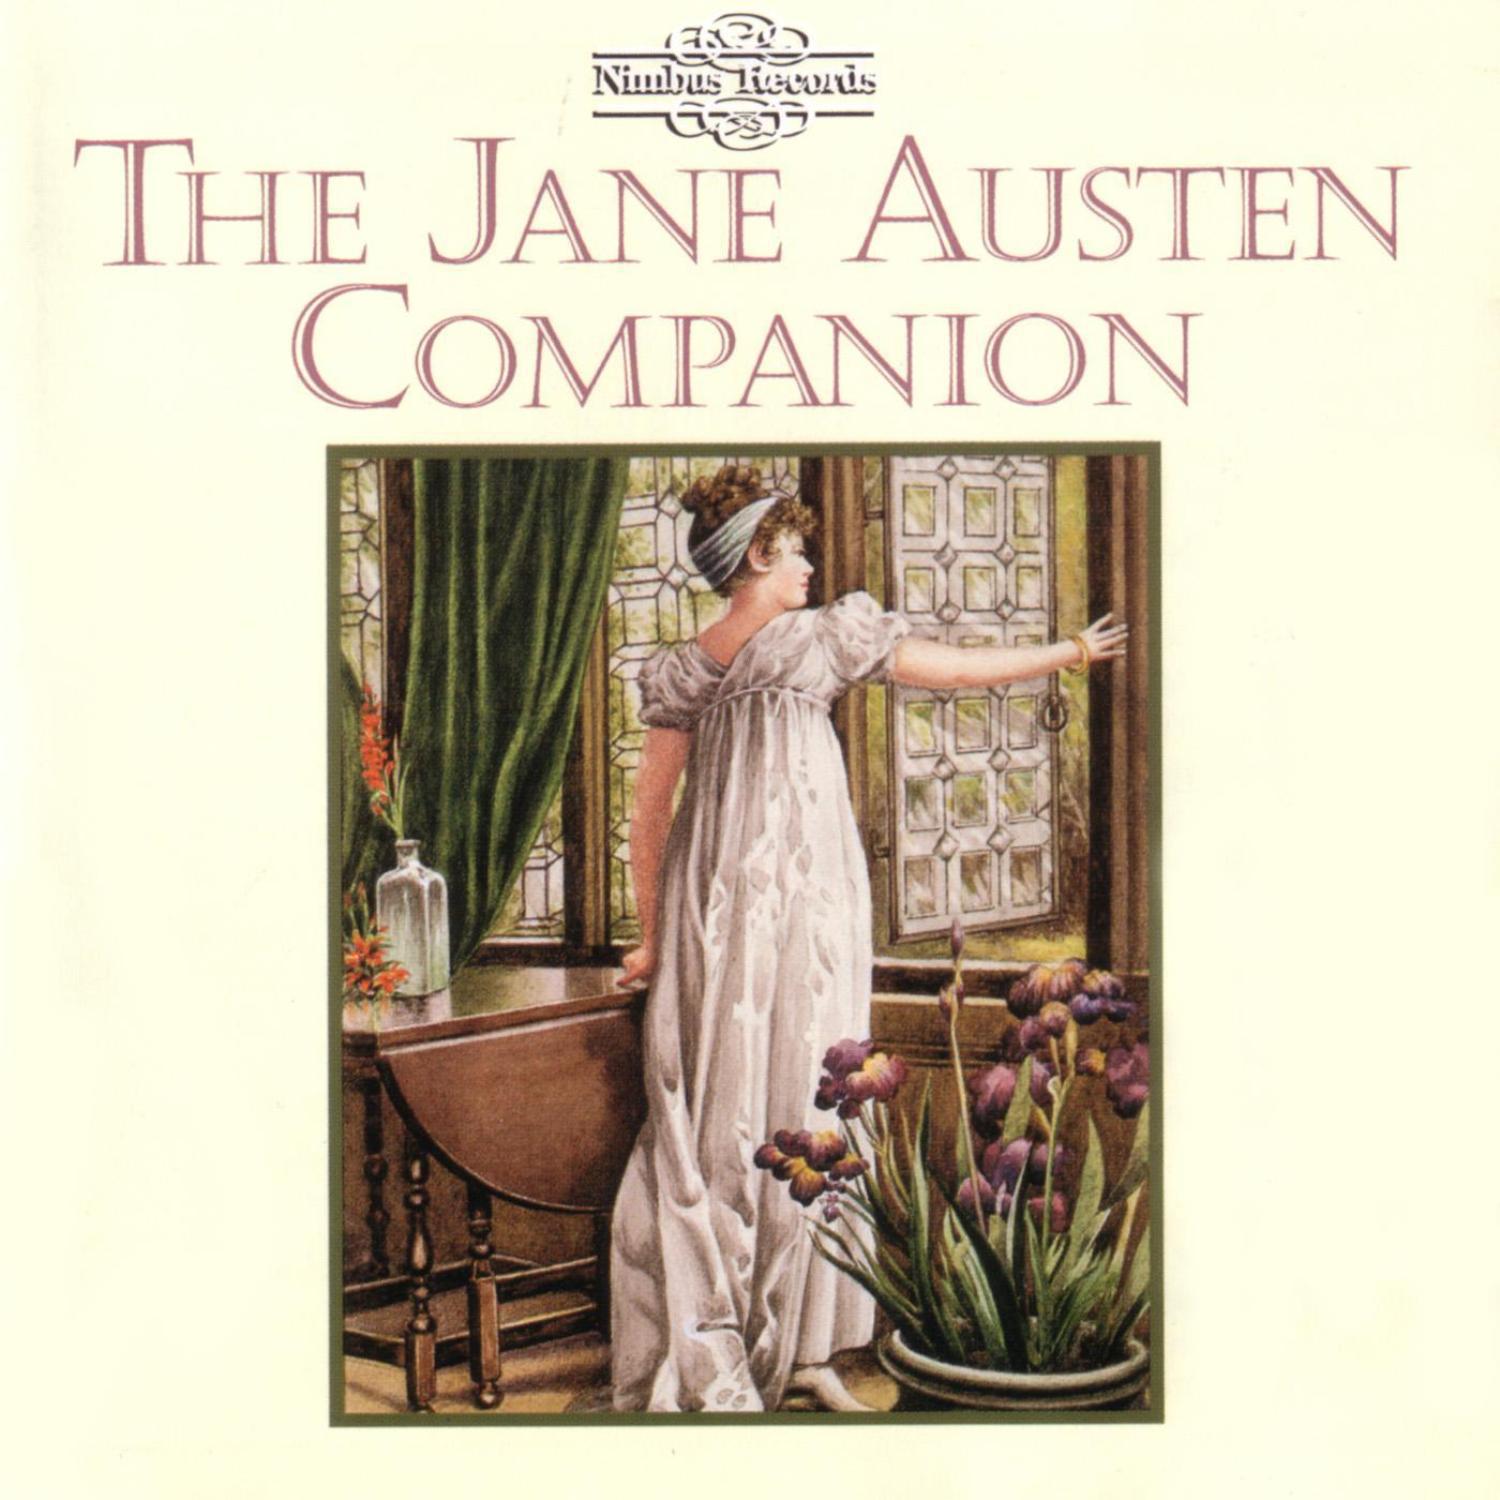 The Jane Austen Companion